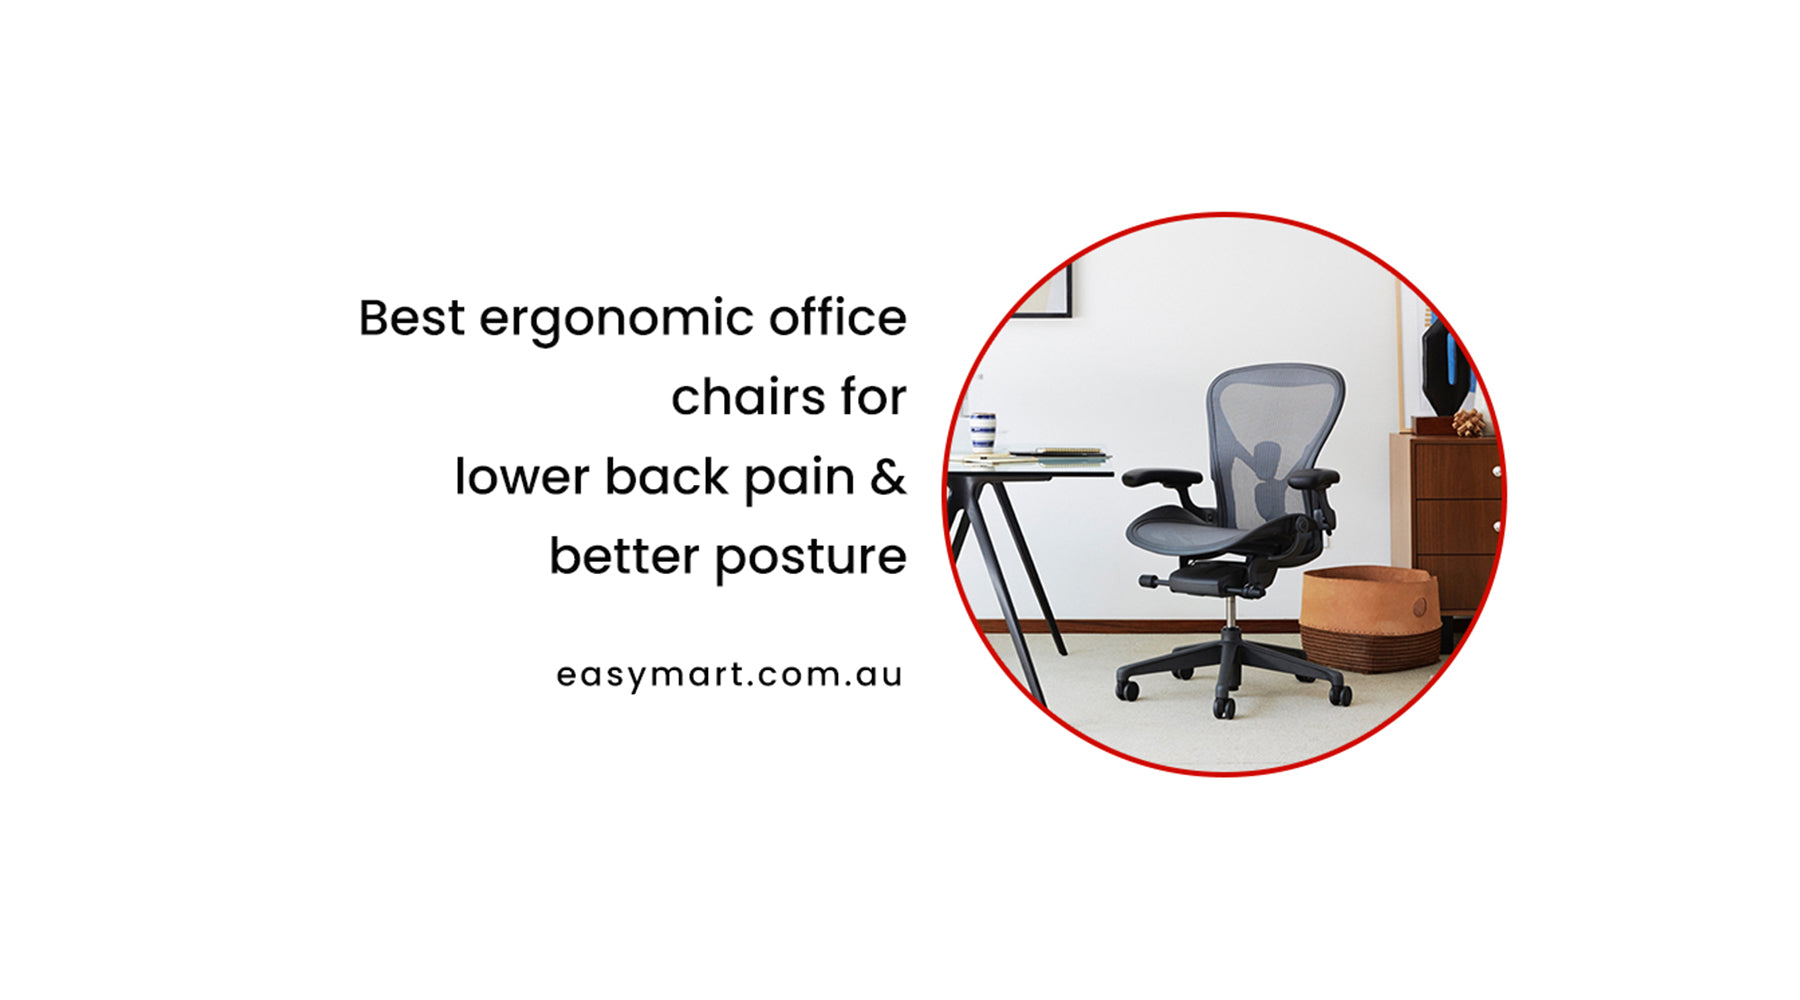 officeworks ergonomic chairs